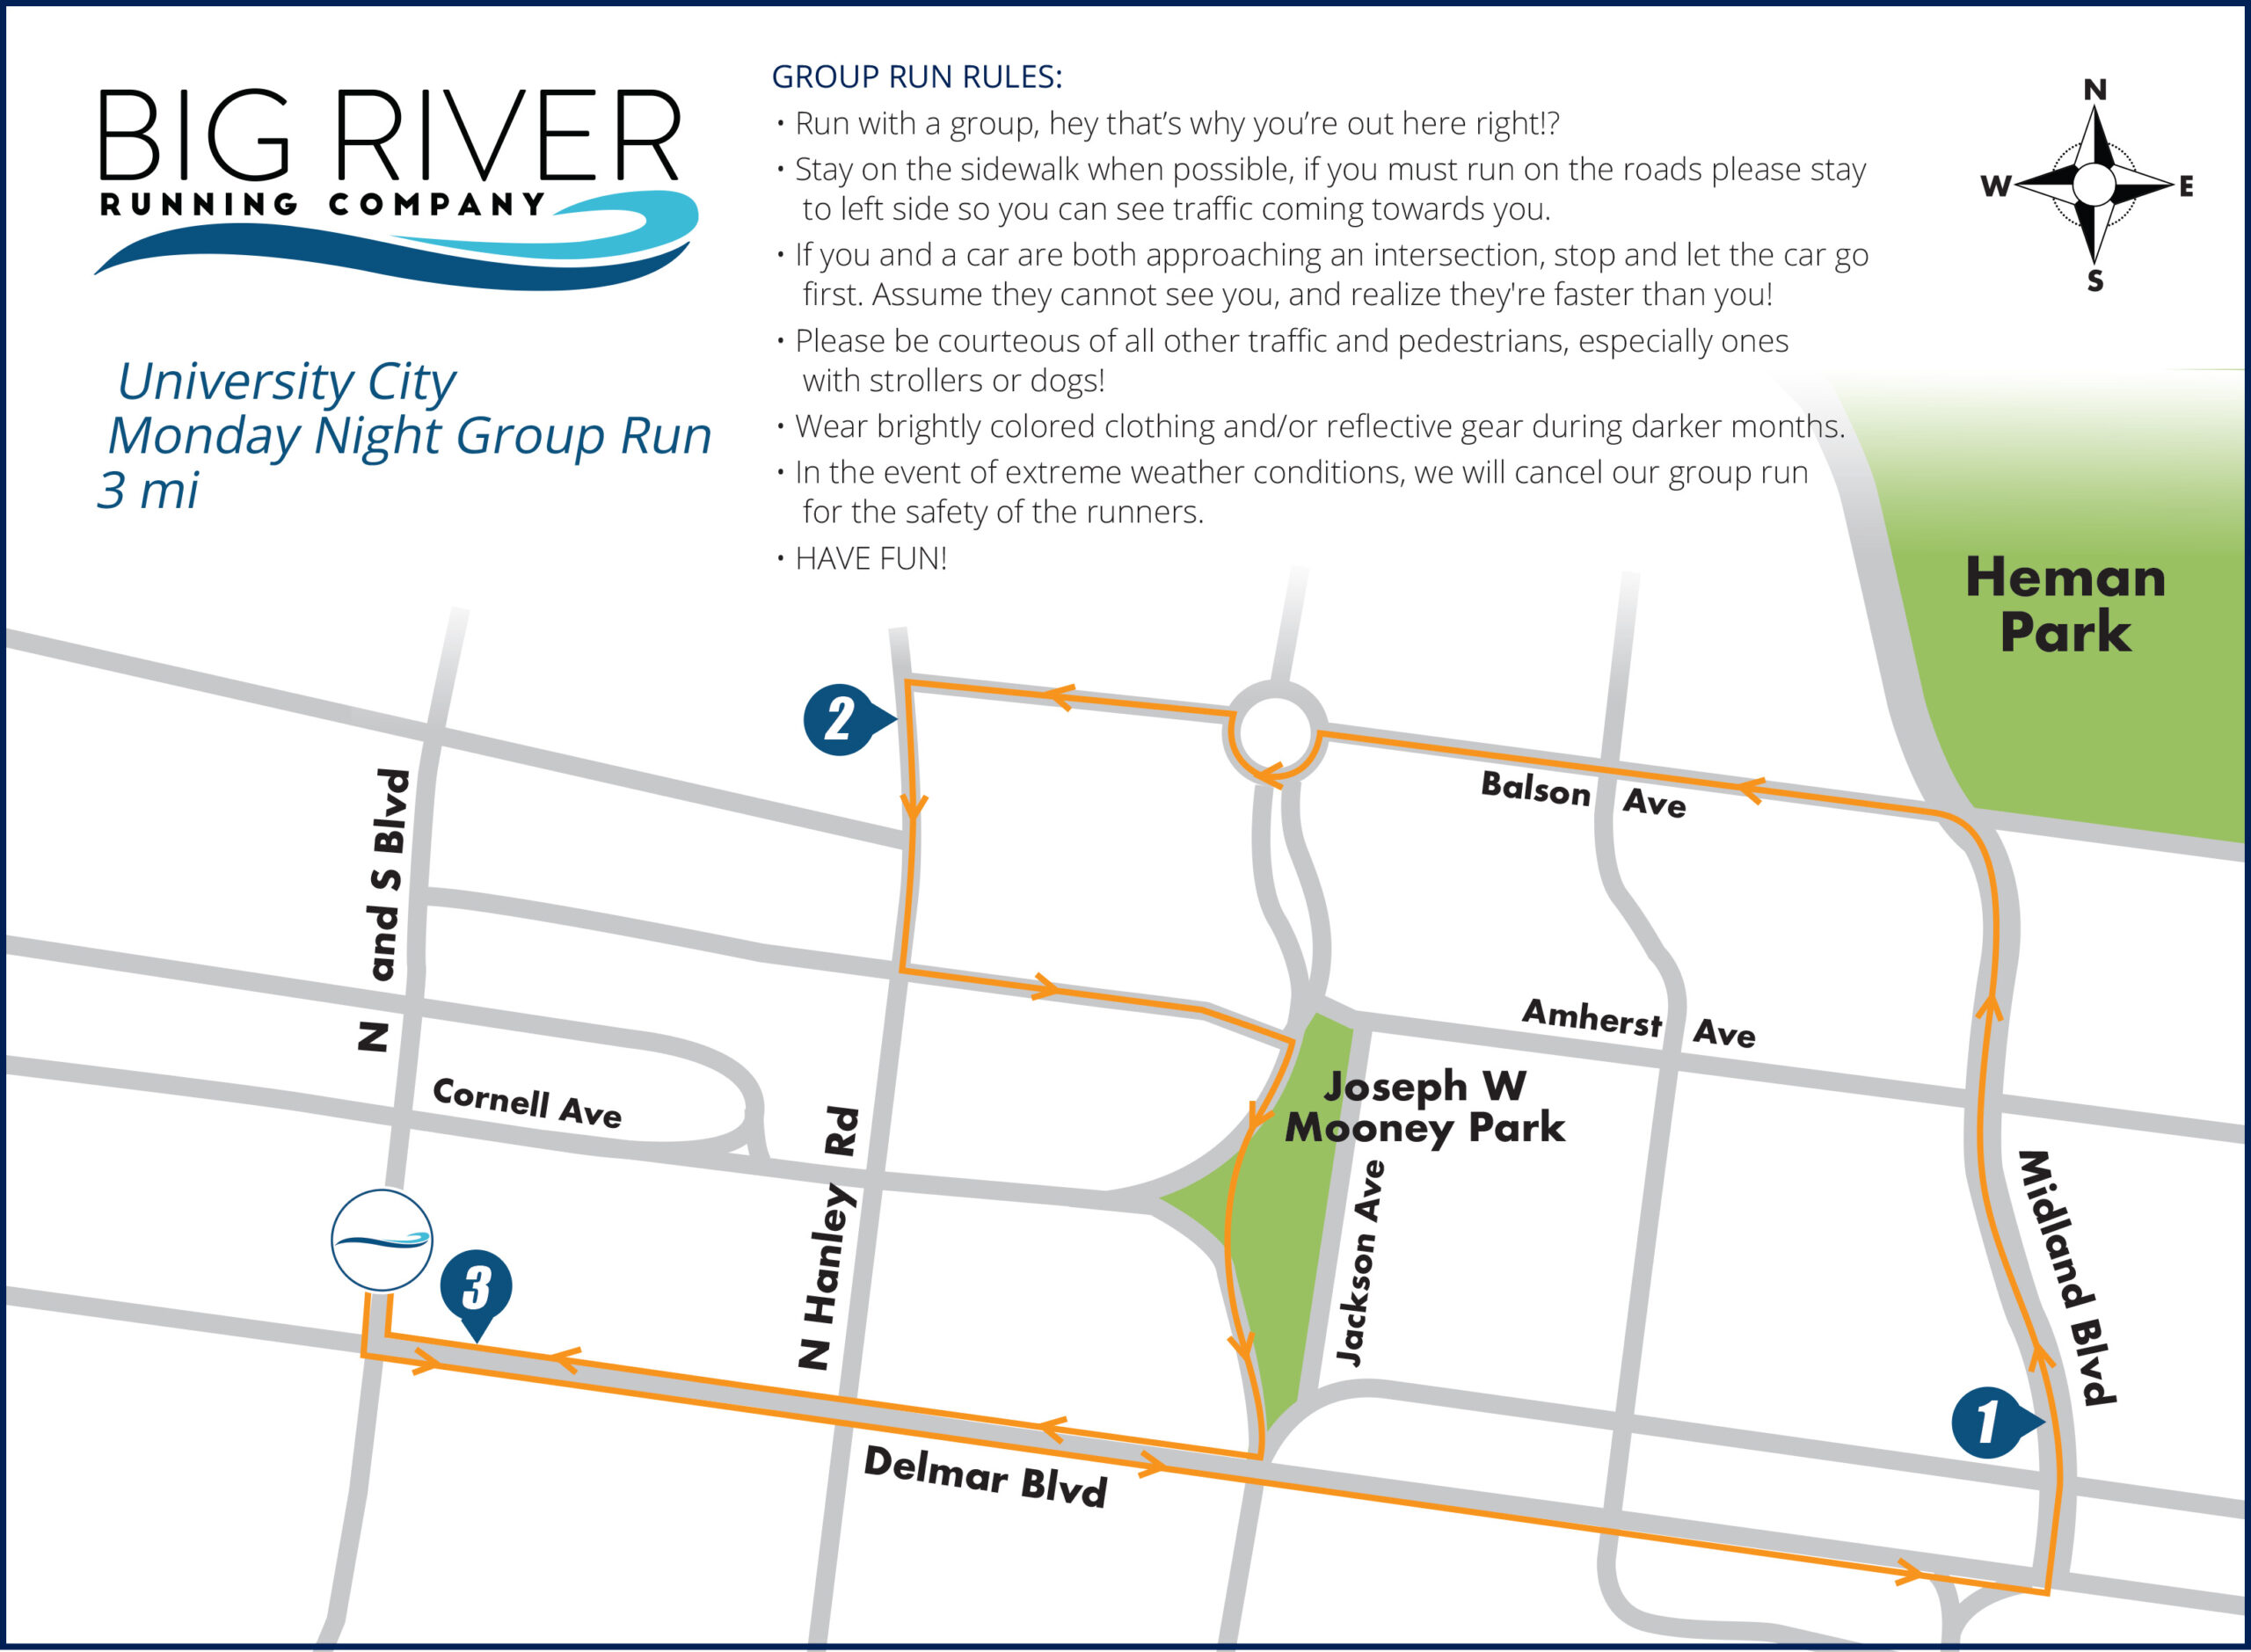 U City 3 Mile run - Big River Running